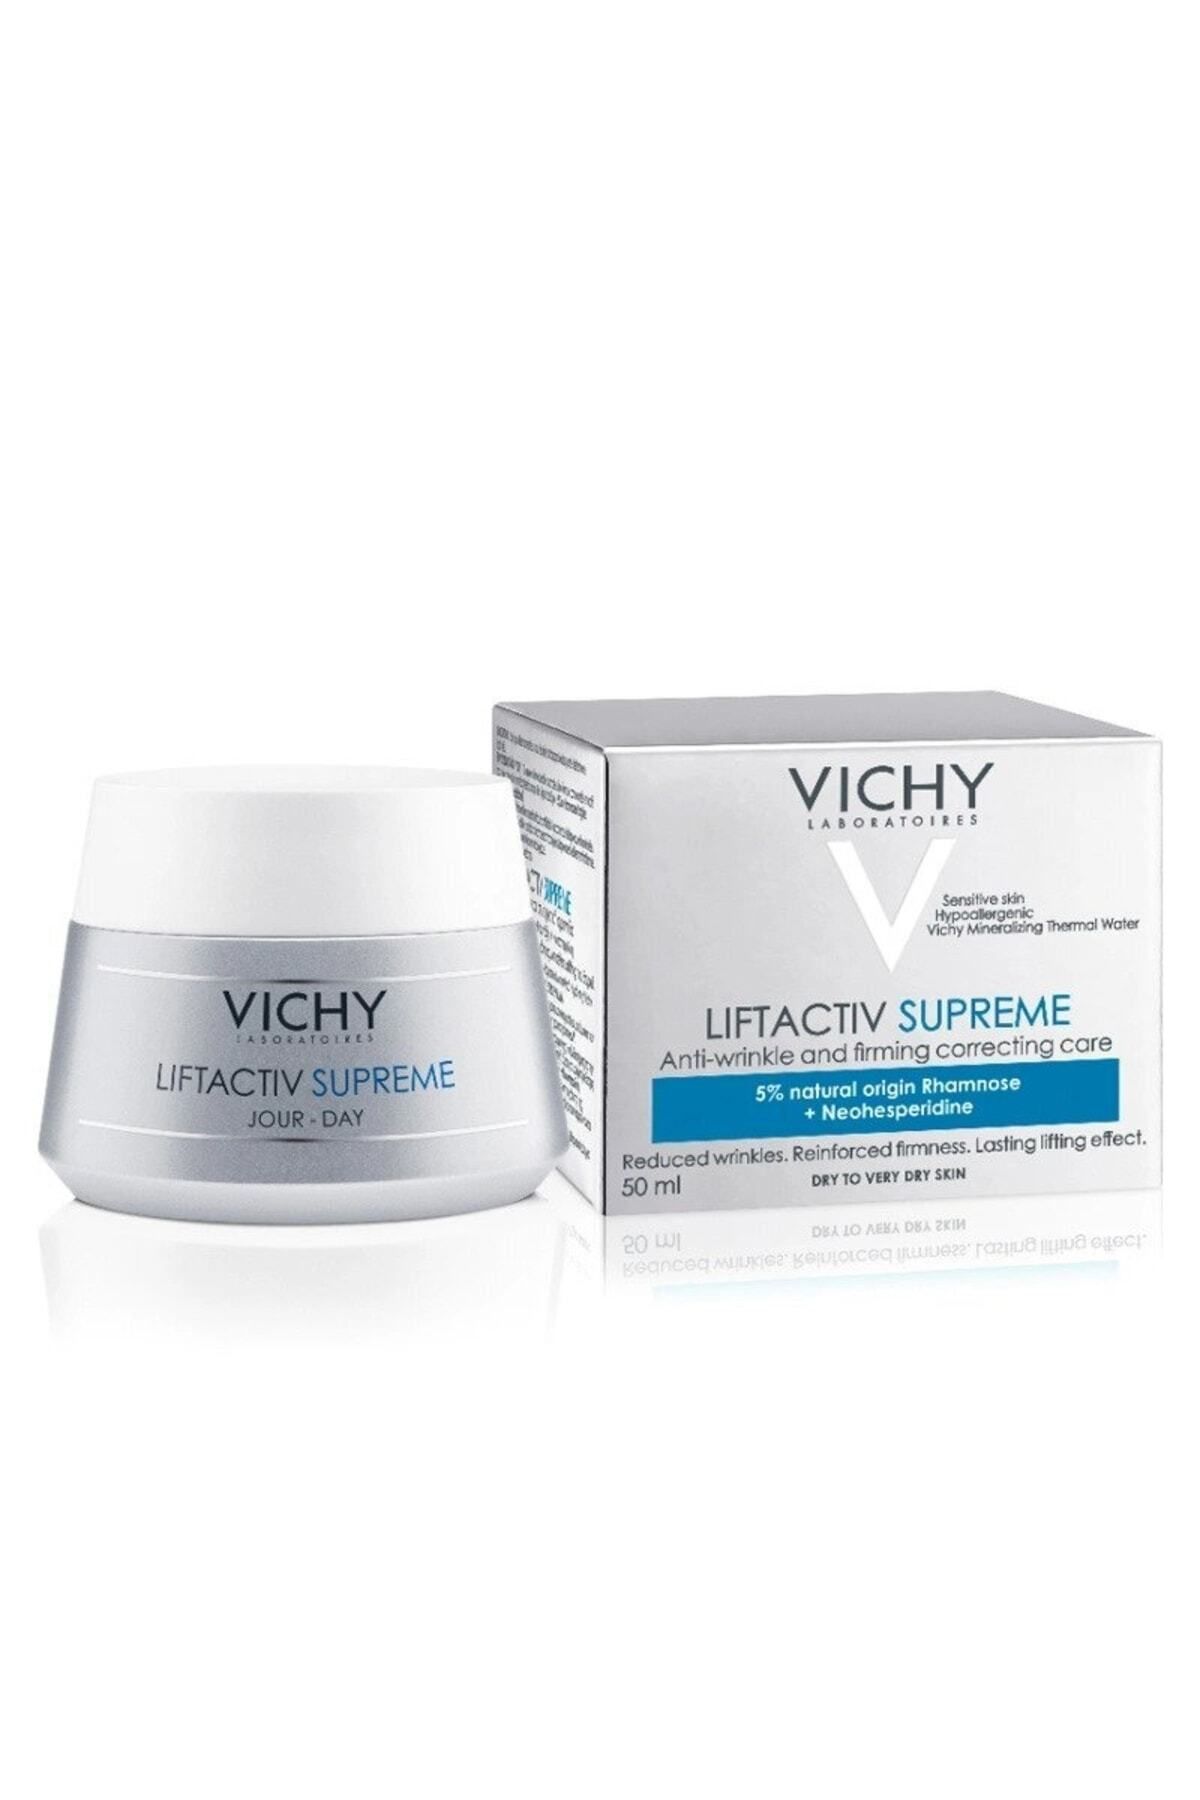 Vichy کرم صورت بالایی حیاتی برای پوست خشک 50 میلی لیتر با عمر 35+